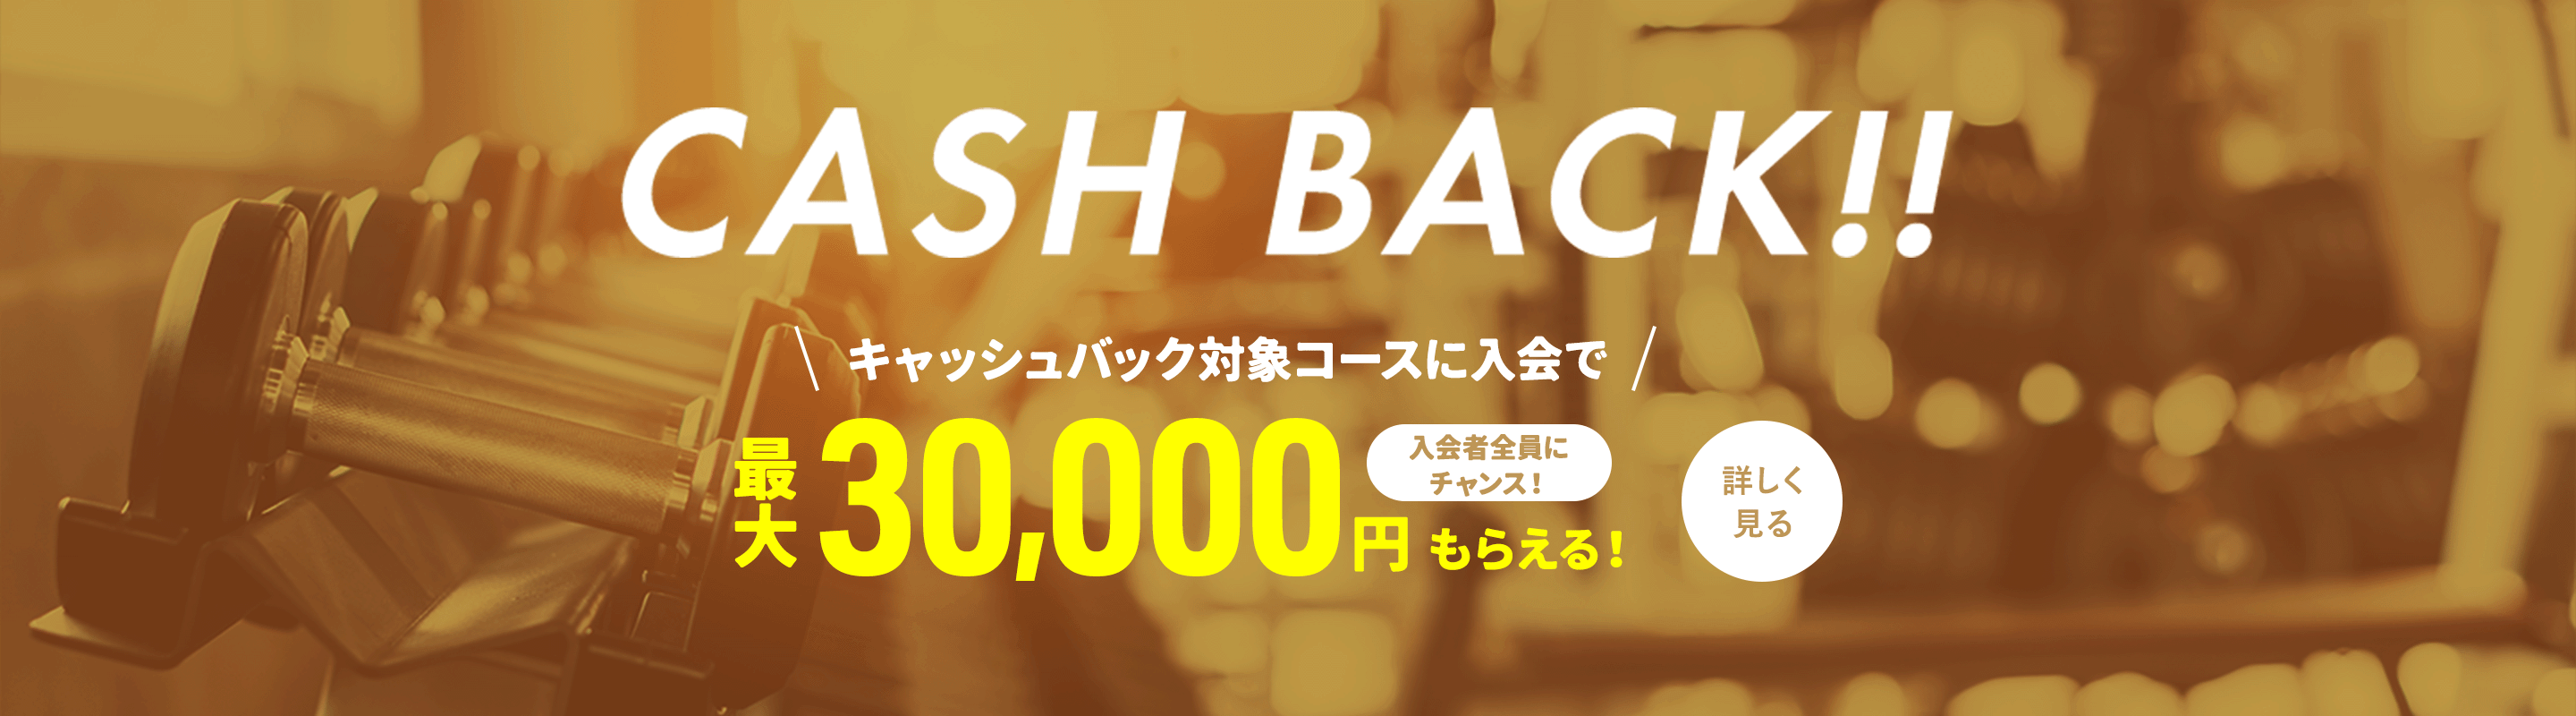 CASH BACK!! キャッシュバック対象コースに入会で入会者全員に60,000円もらえる! 詳しく見る